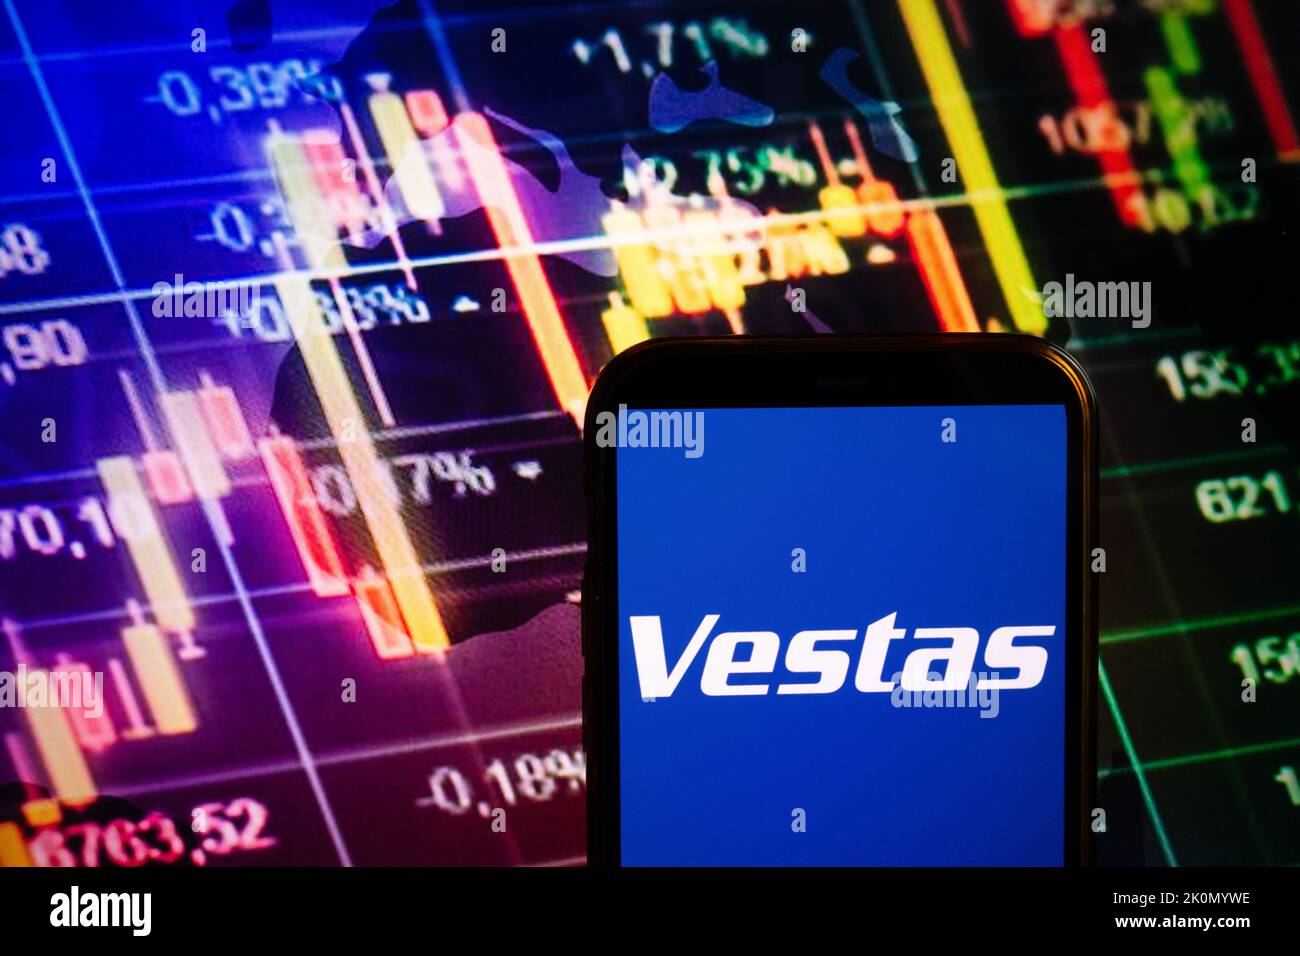 KONSKIE, POLAND - September 10, 2022: Smartphone displaying logo of Vestas Wind Systems company on stock exchange diagram background Stock Photo